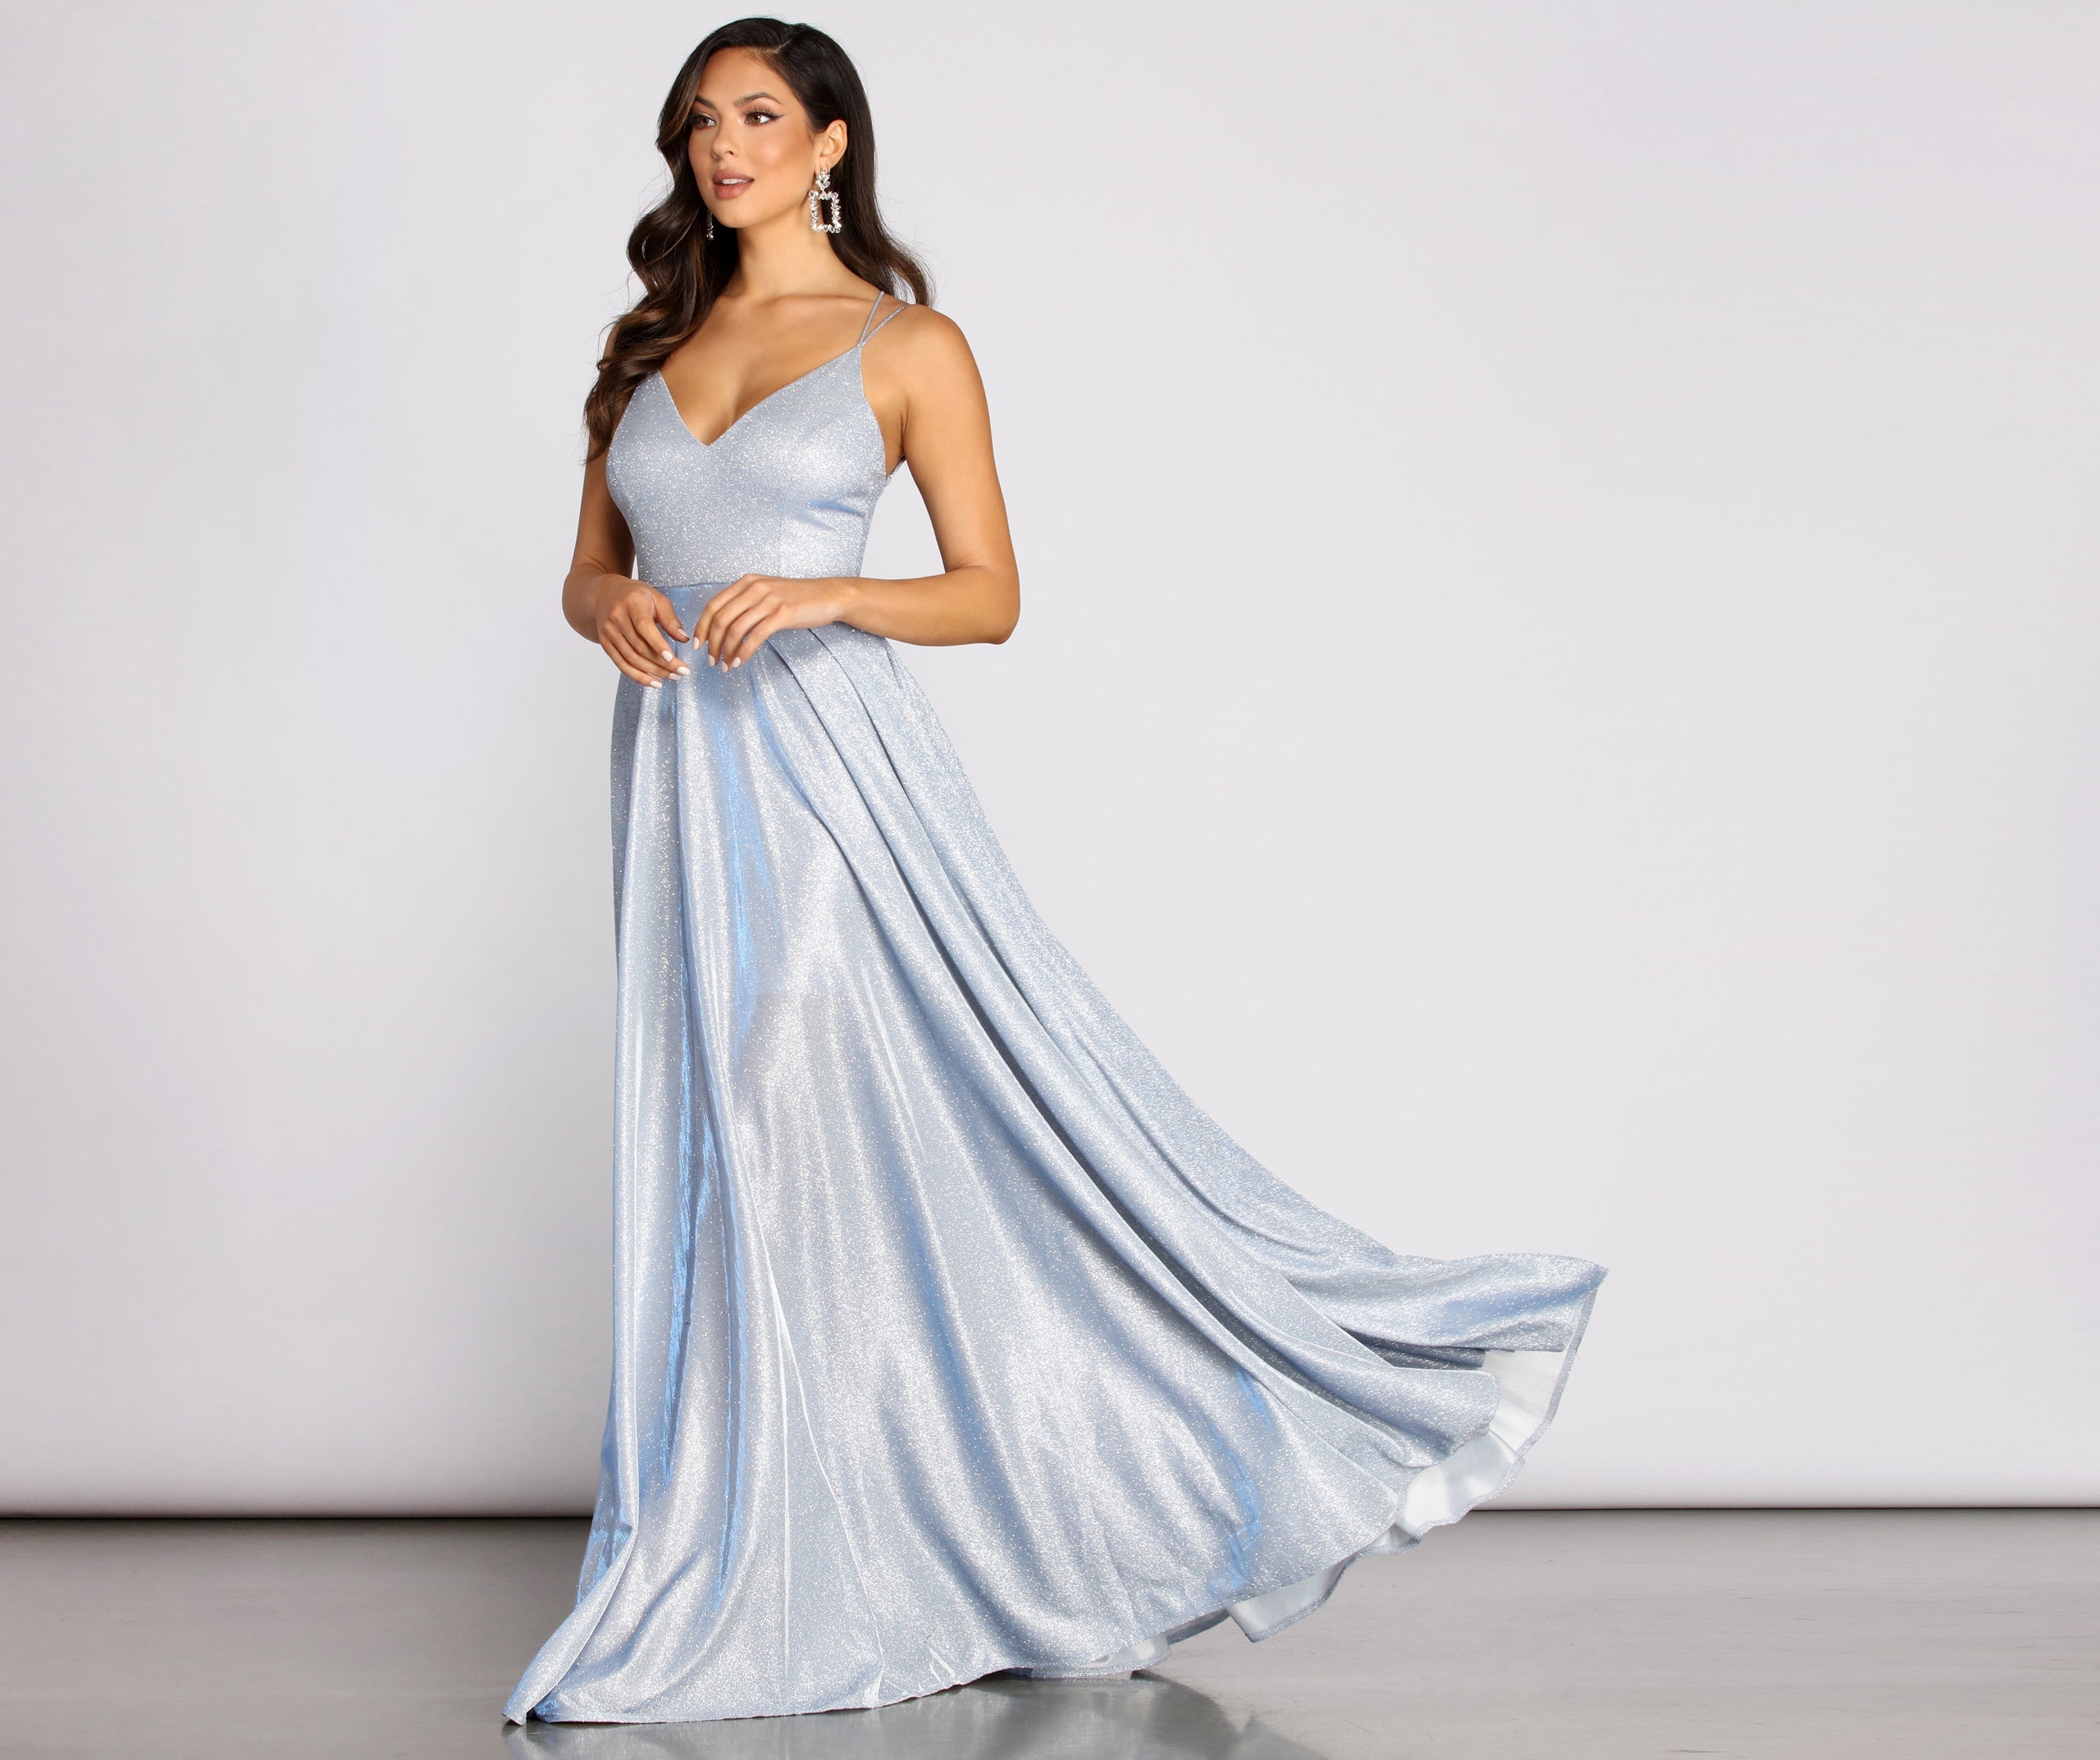 Elana Glitter A-Line Dress